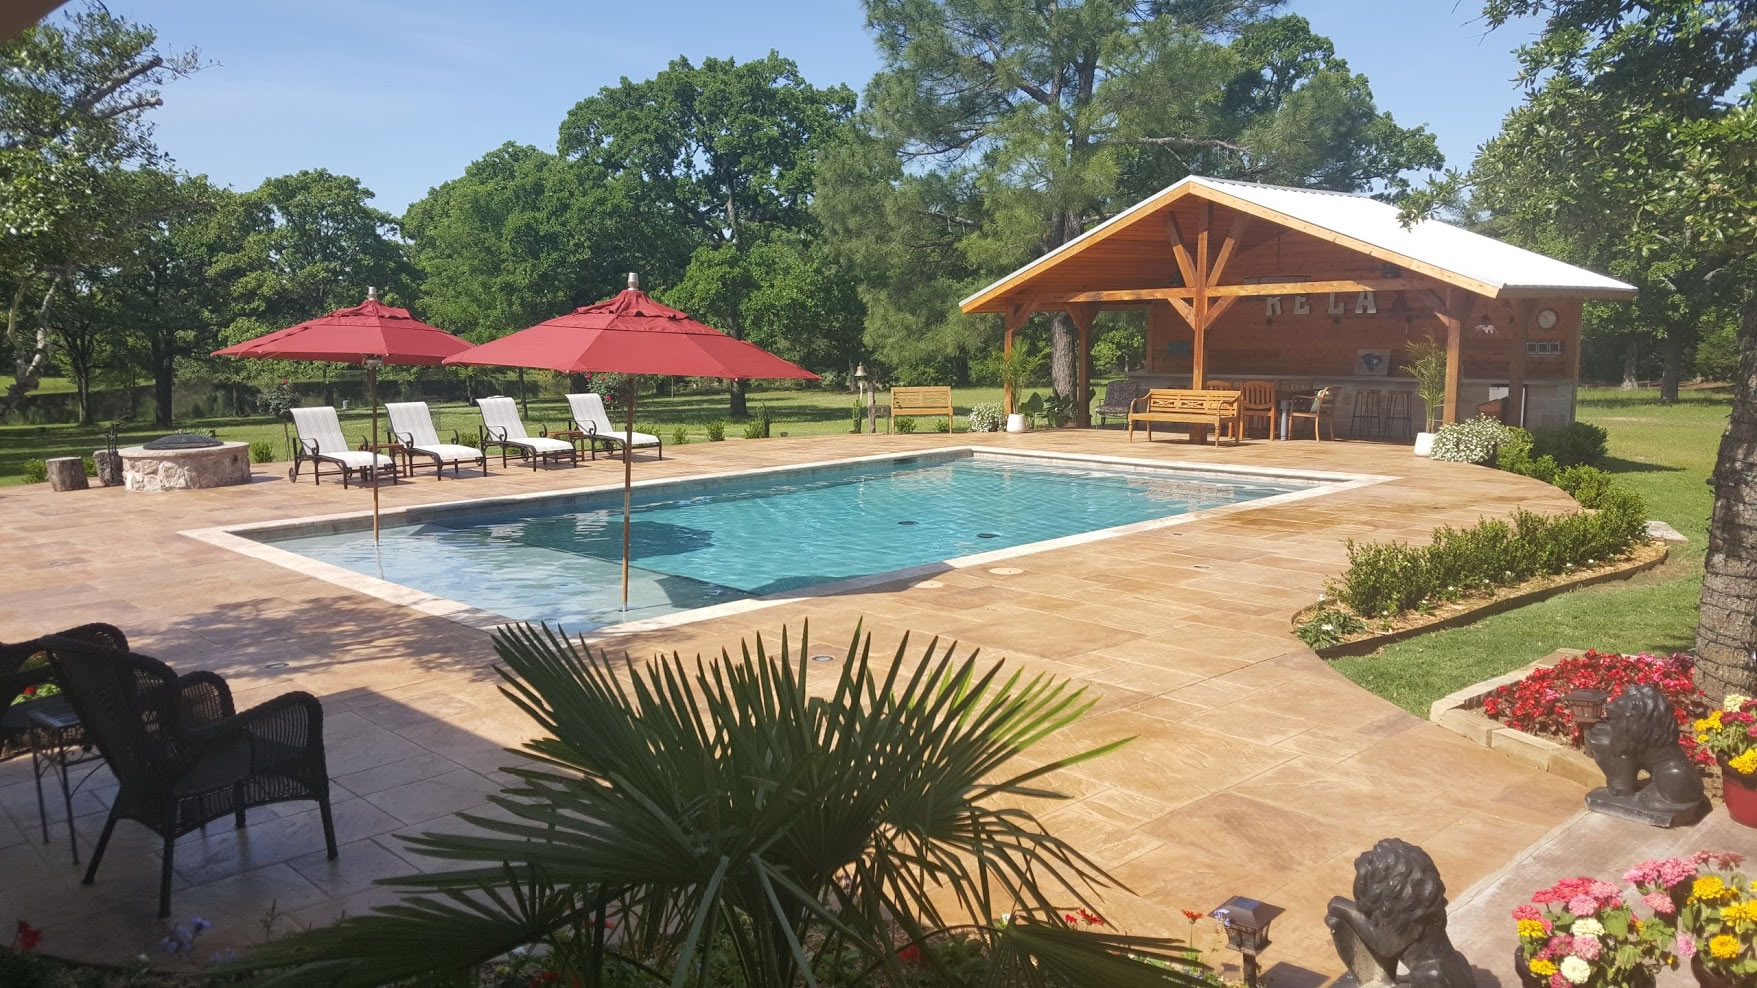 7 dallas pool company backyard oasis Home